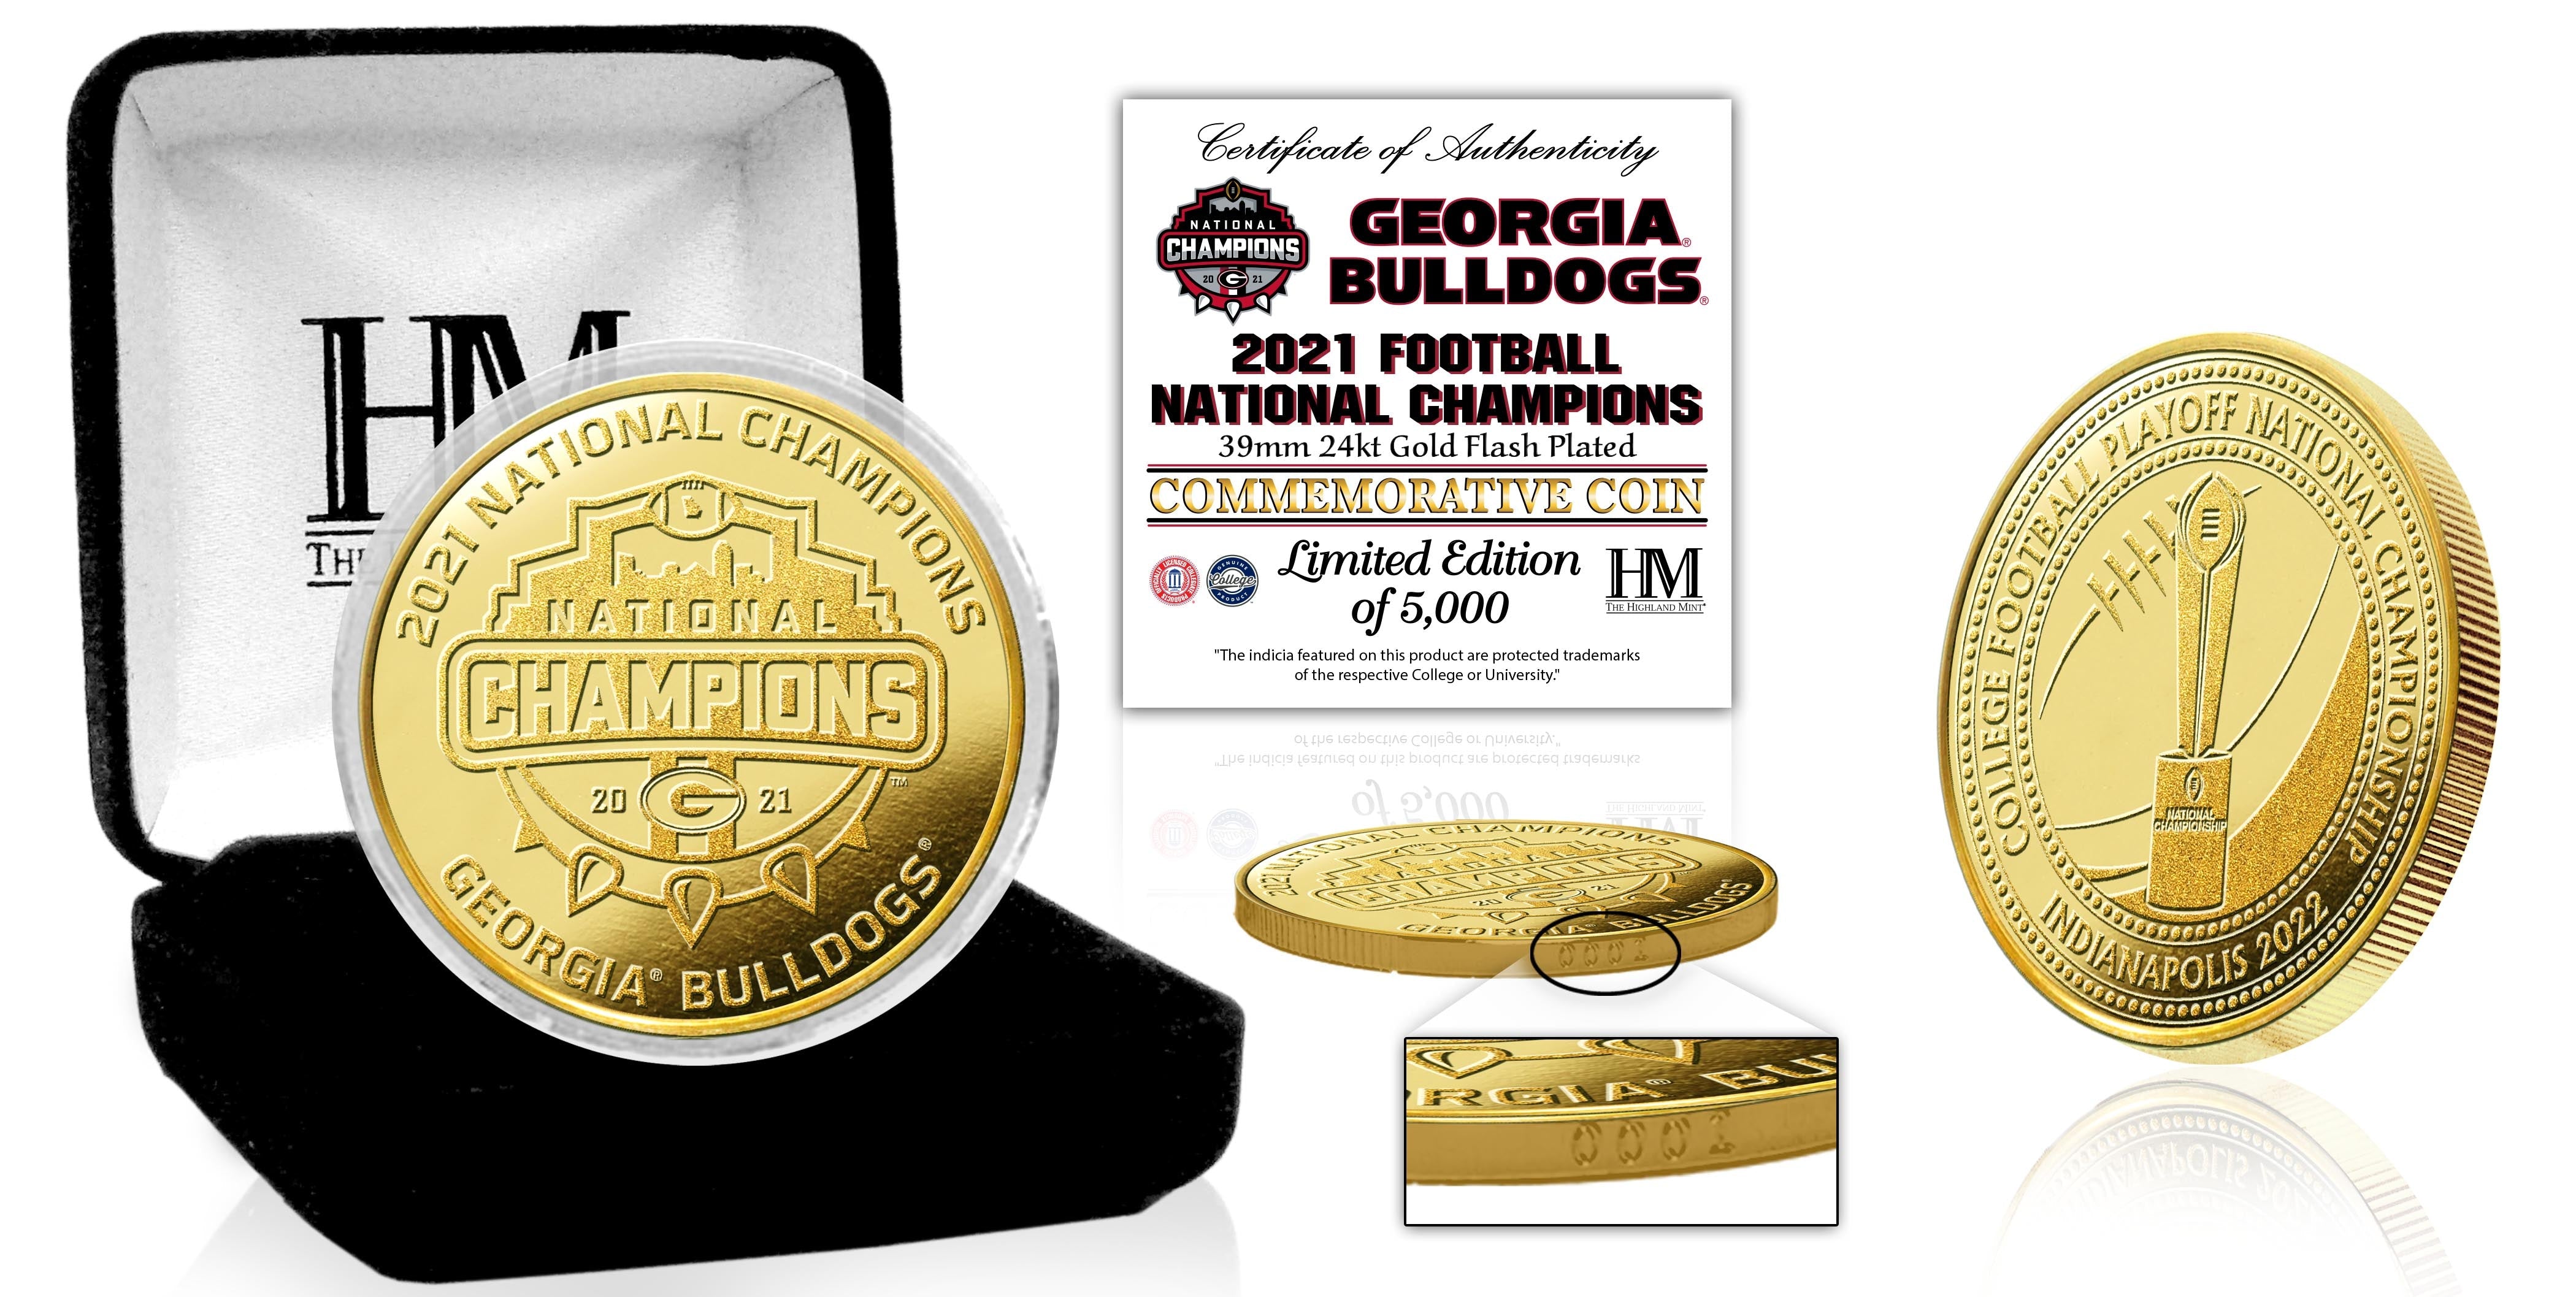 Georgia Bulldogs 2021 National Champions Gold Coin